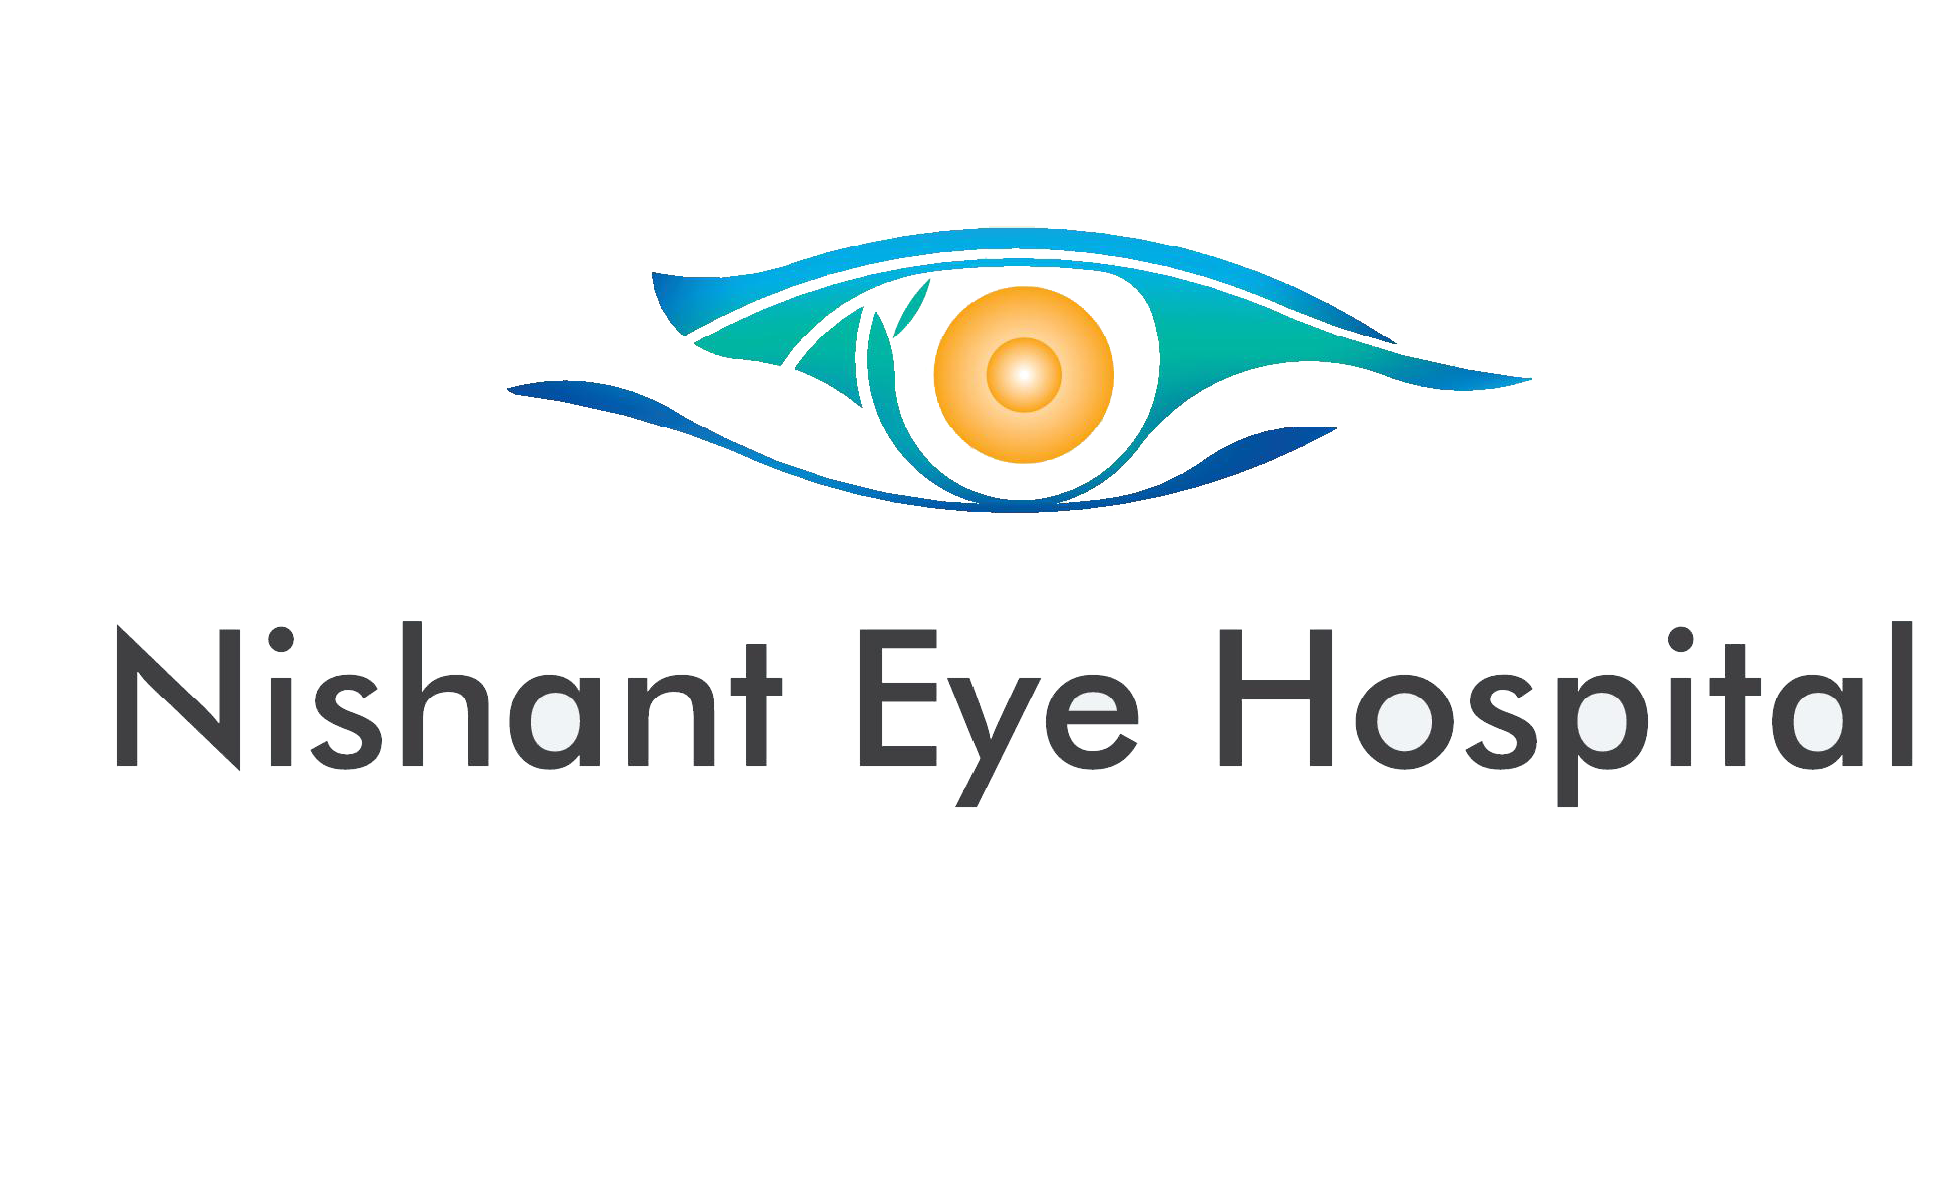 Nishant Eye Hospital|Dentists|Medical Services